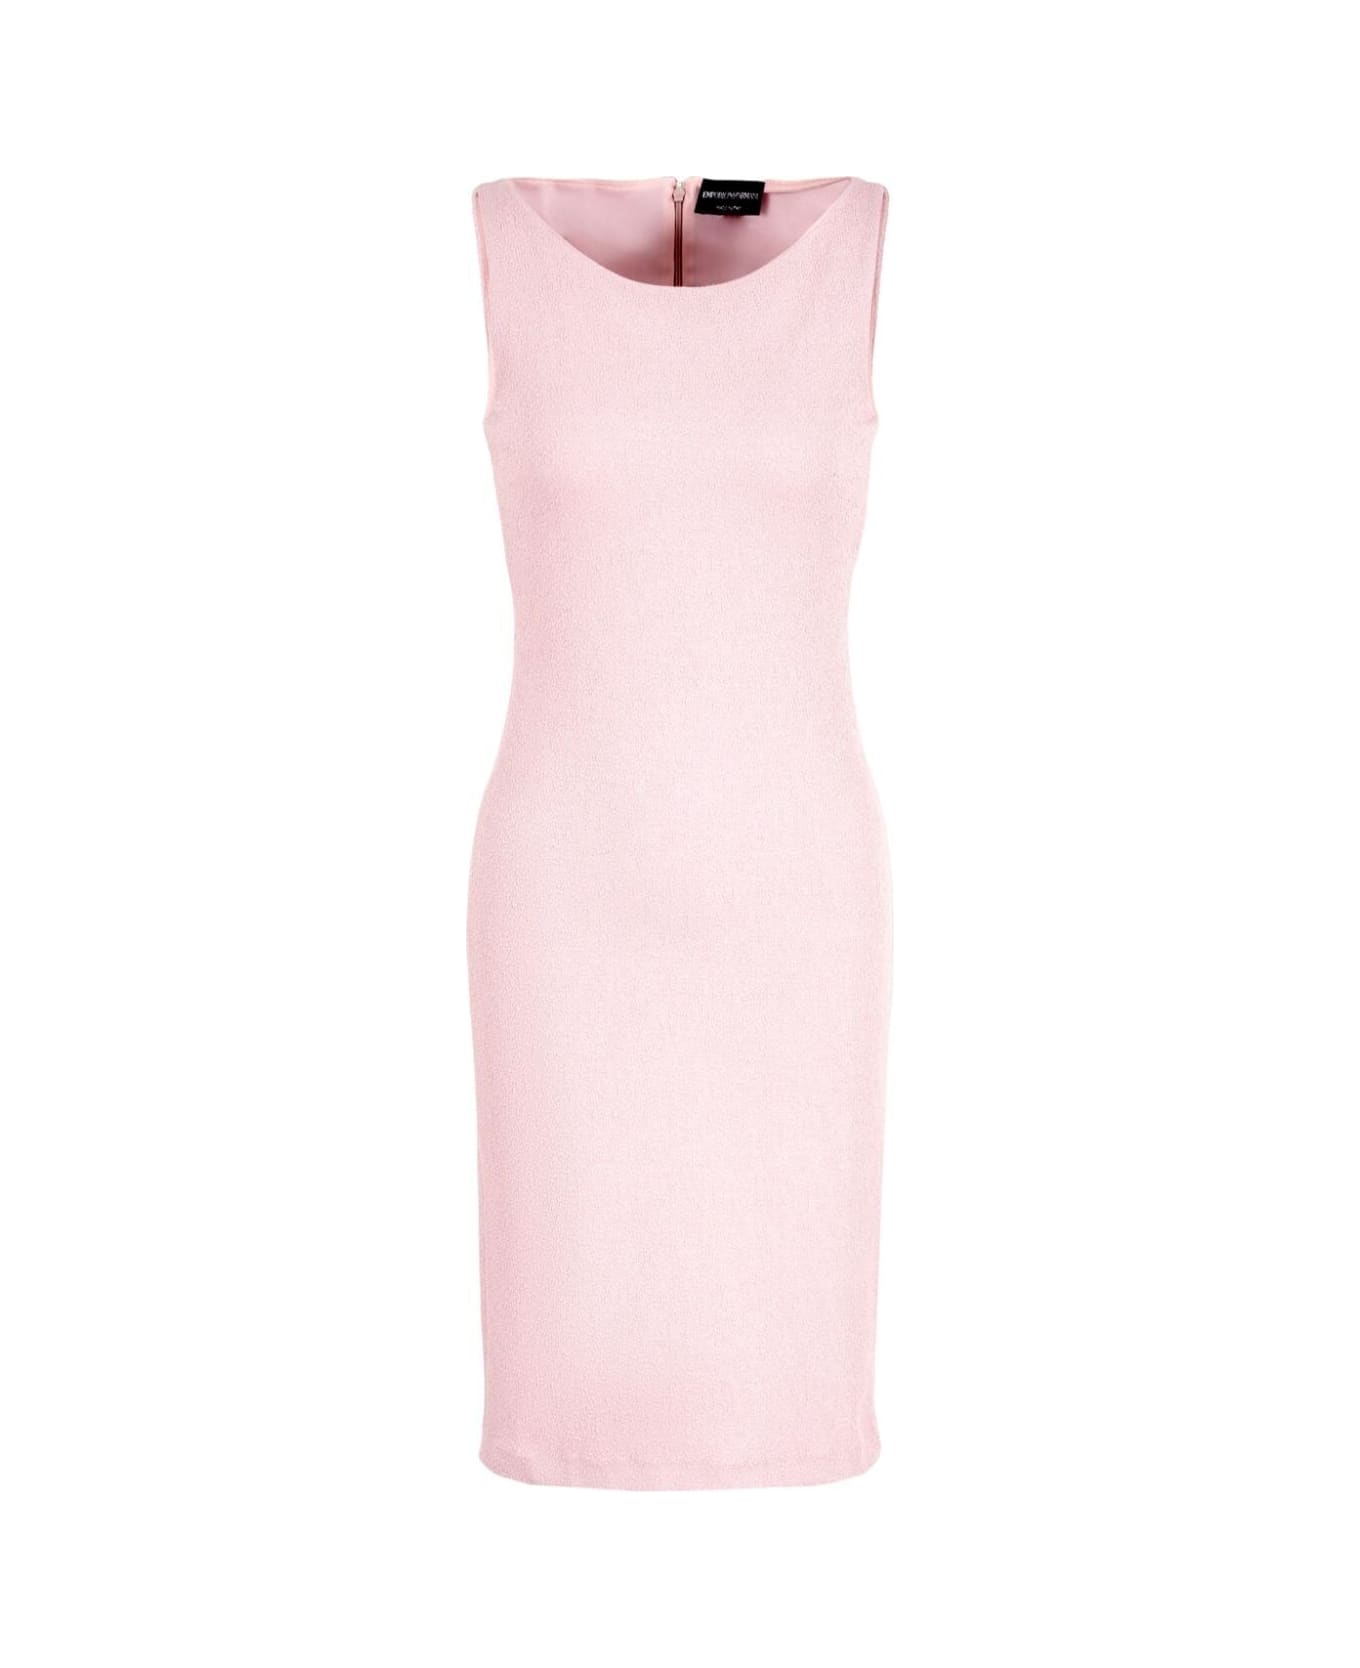 Emporio Armani Sleeveless Pencil Dress - Fantasy Pink Lilac